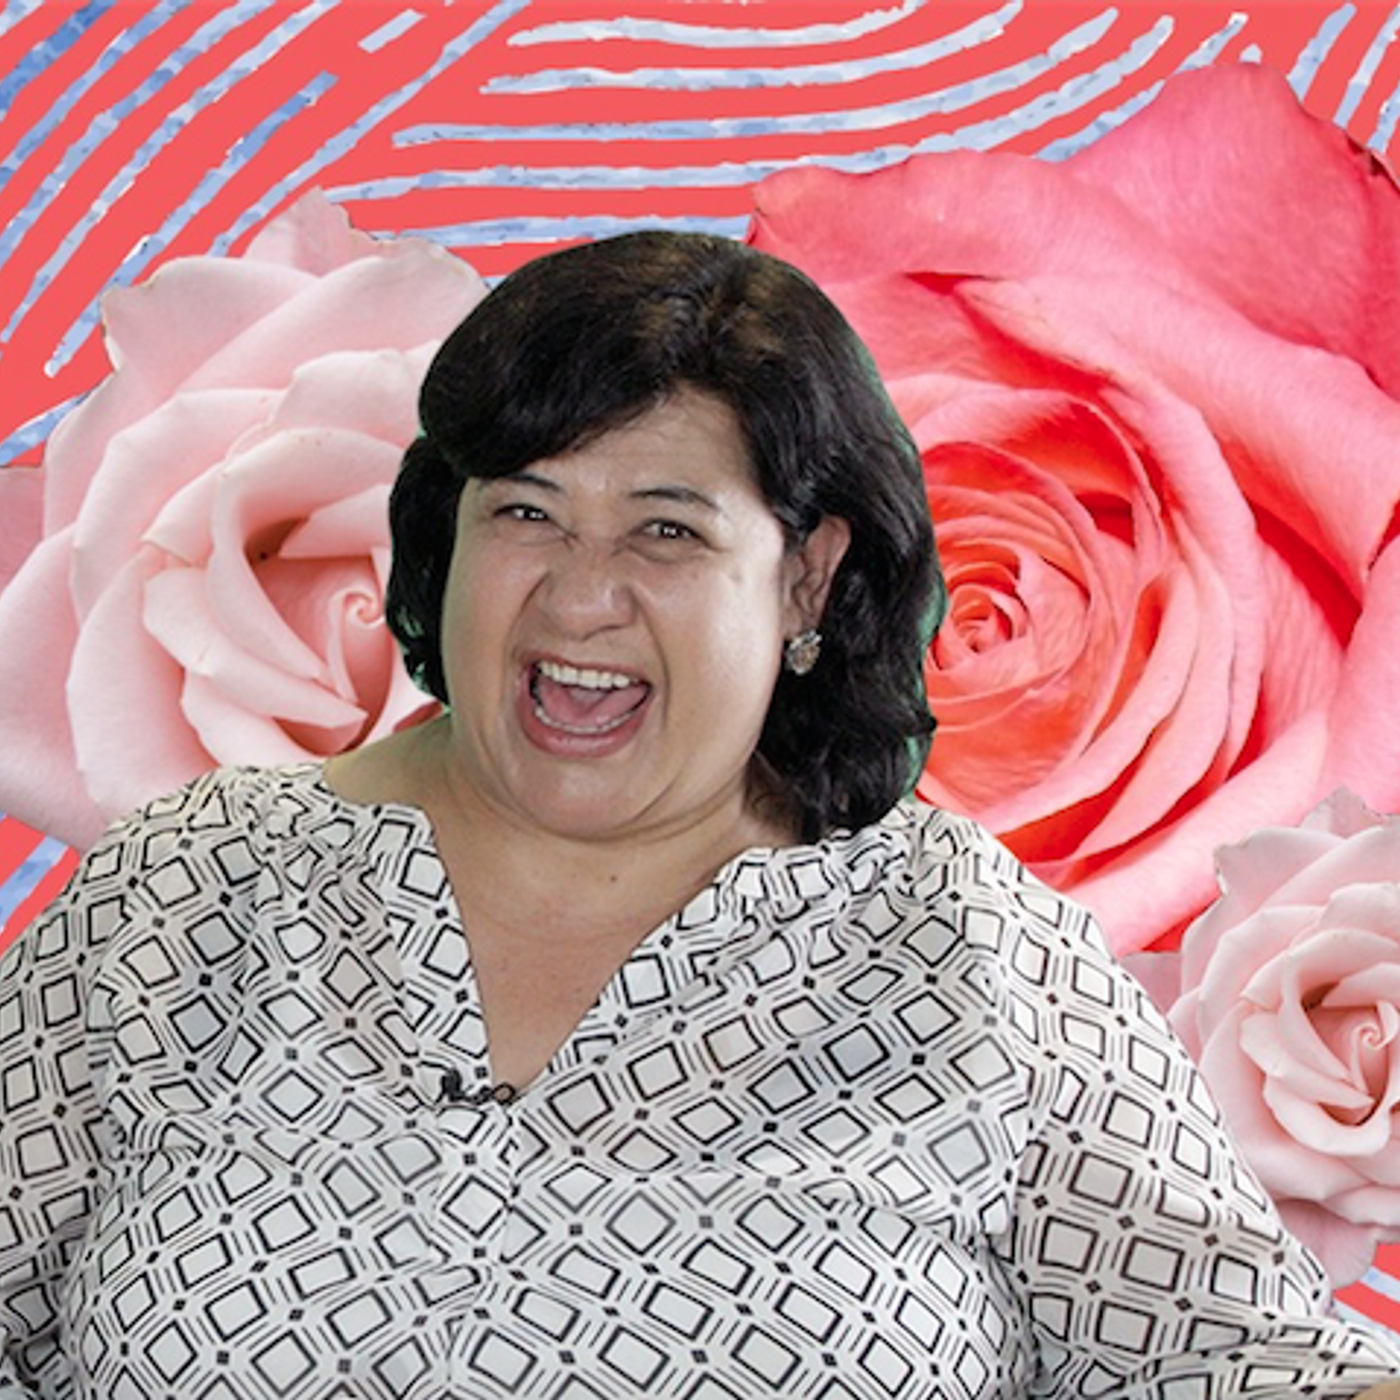 Thumbnail for "Episode 88: Rosa Mamá".